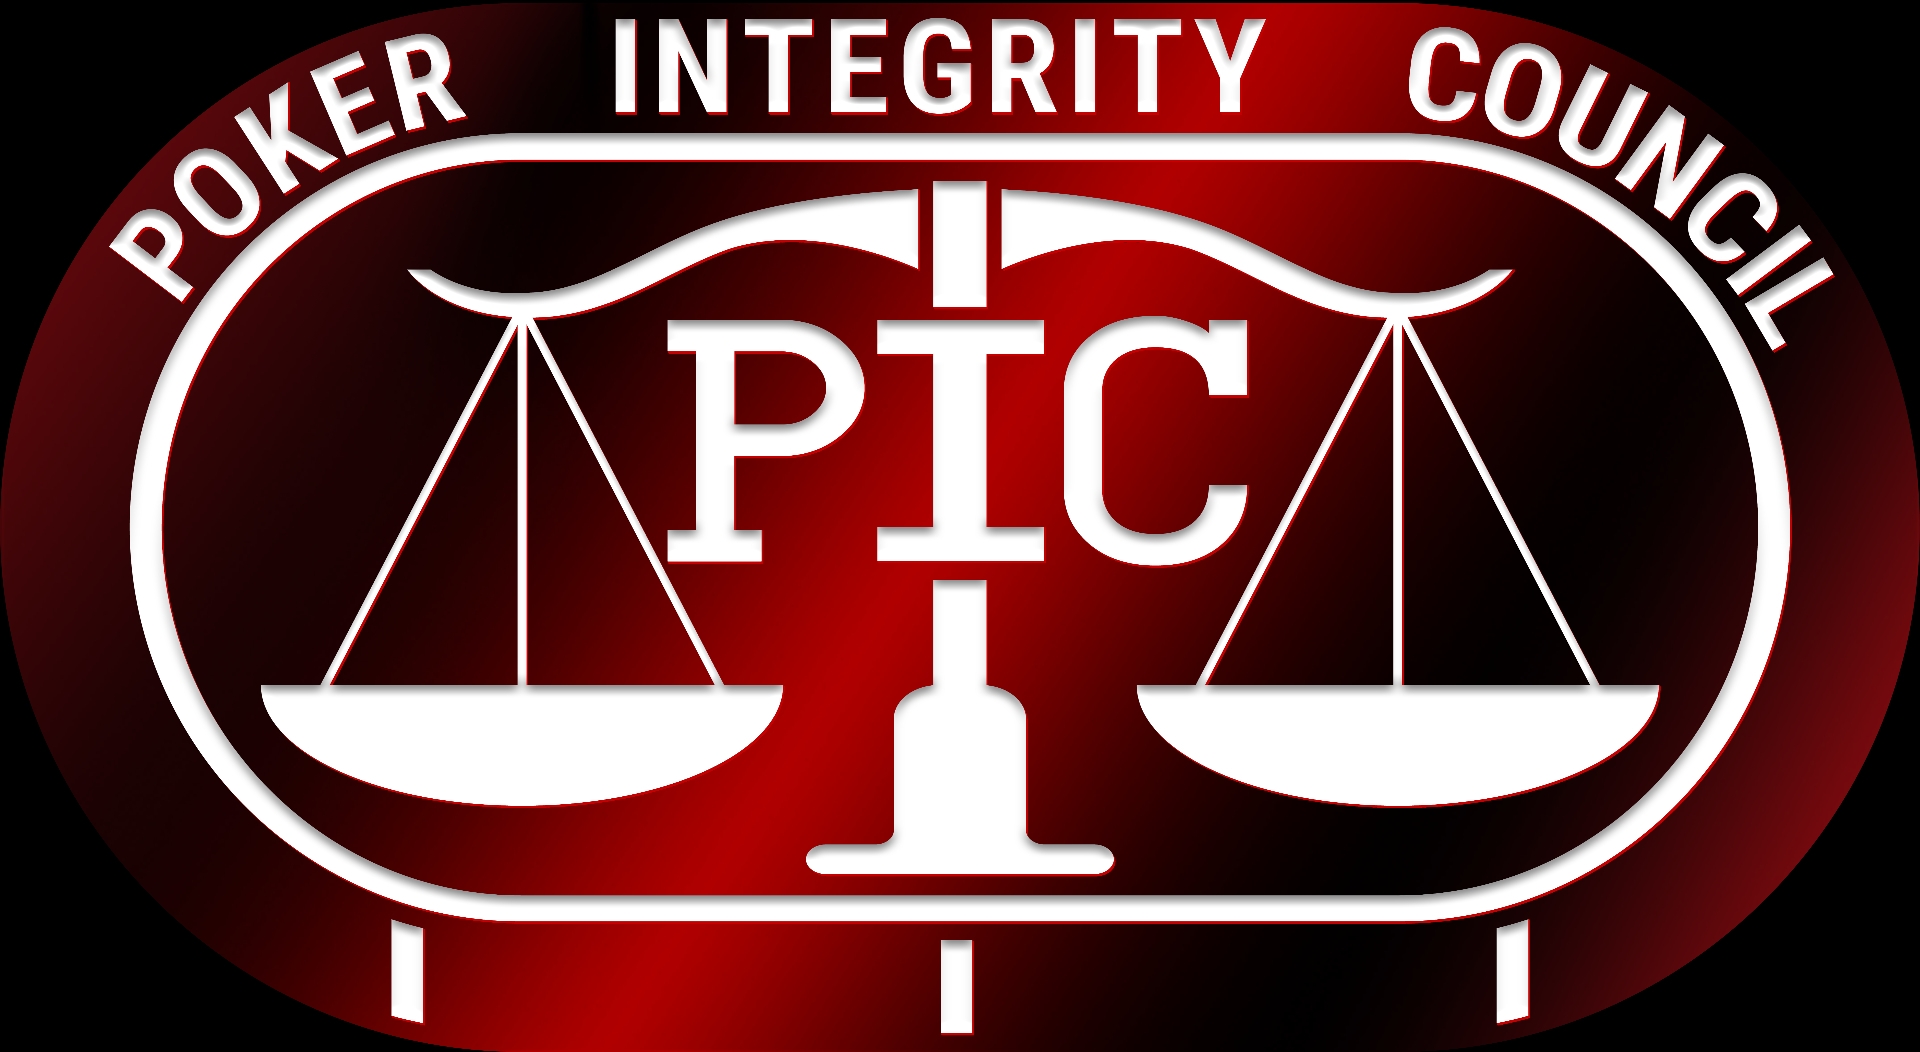 ggpoker poker integrity council